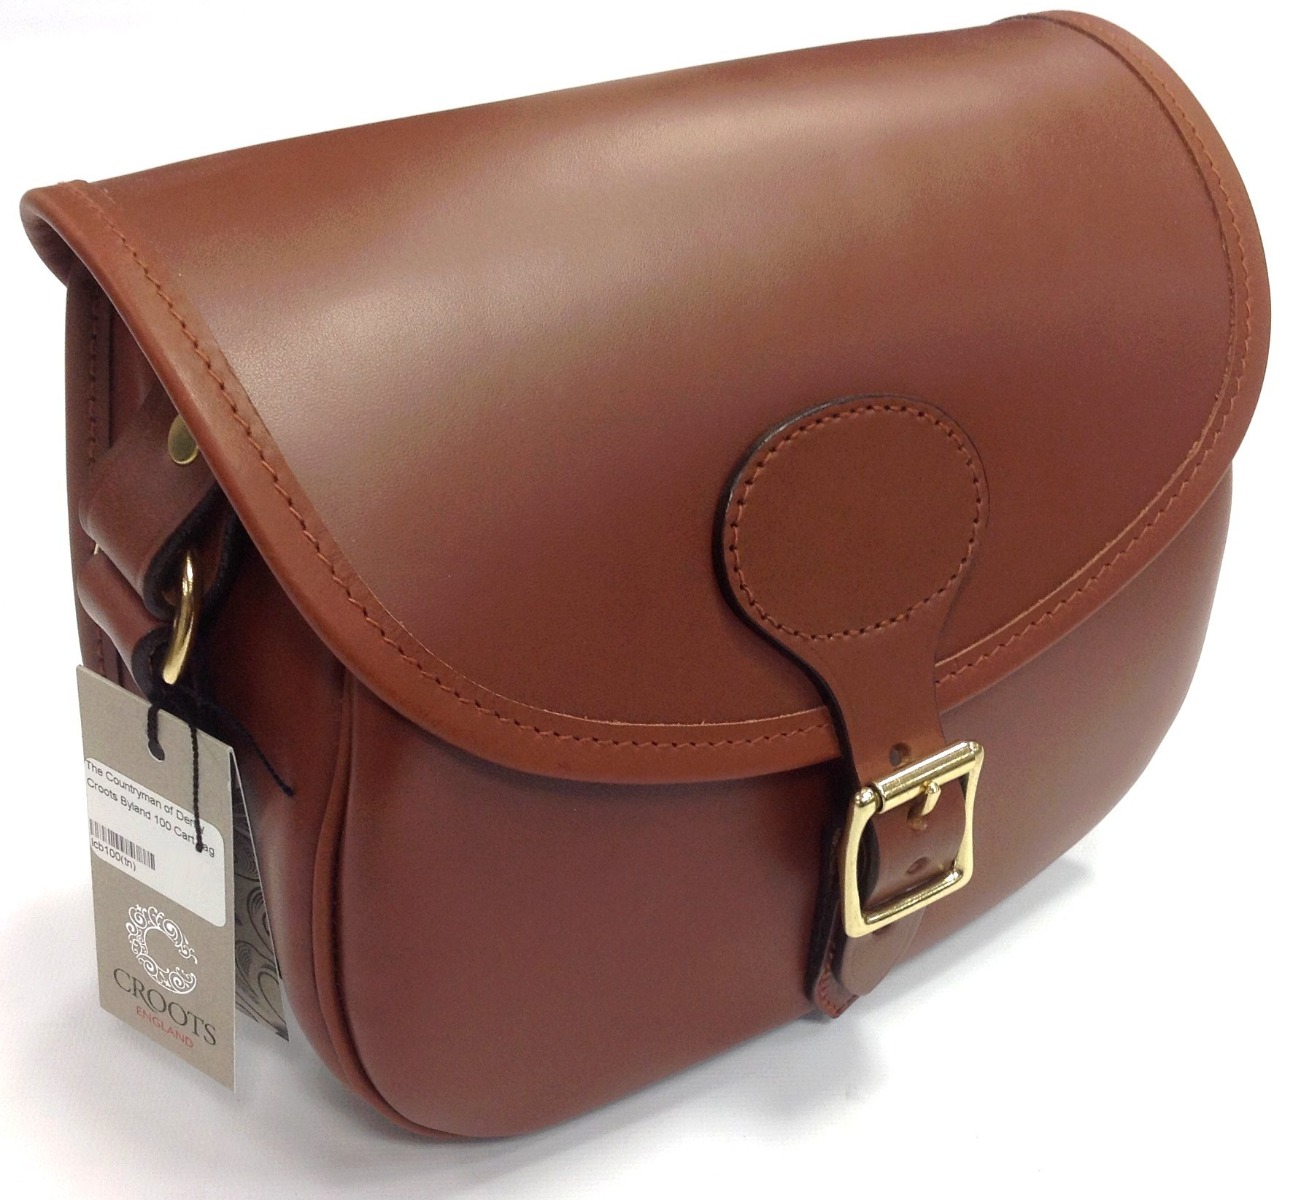 Croots Byland Leather 100 Cartridge Bag - London Tan